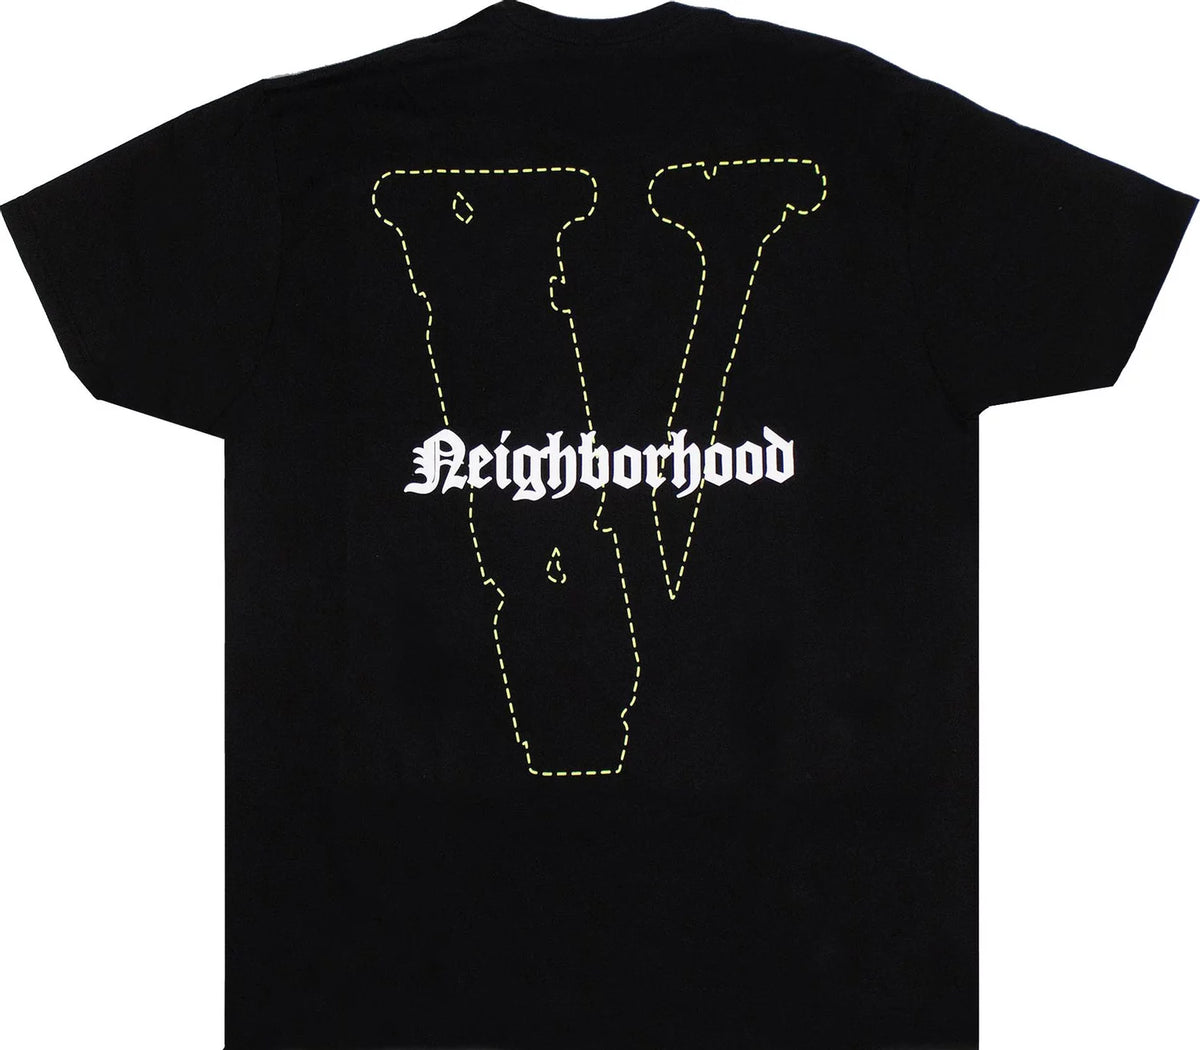 Vlone x Neighborhood Skull Short-Sleeve T-Shirt 'Black/Green'